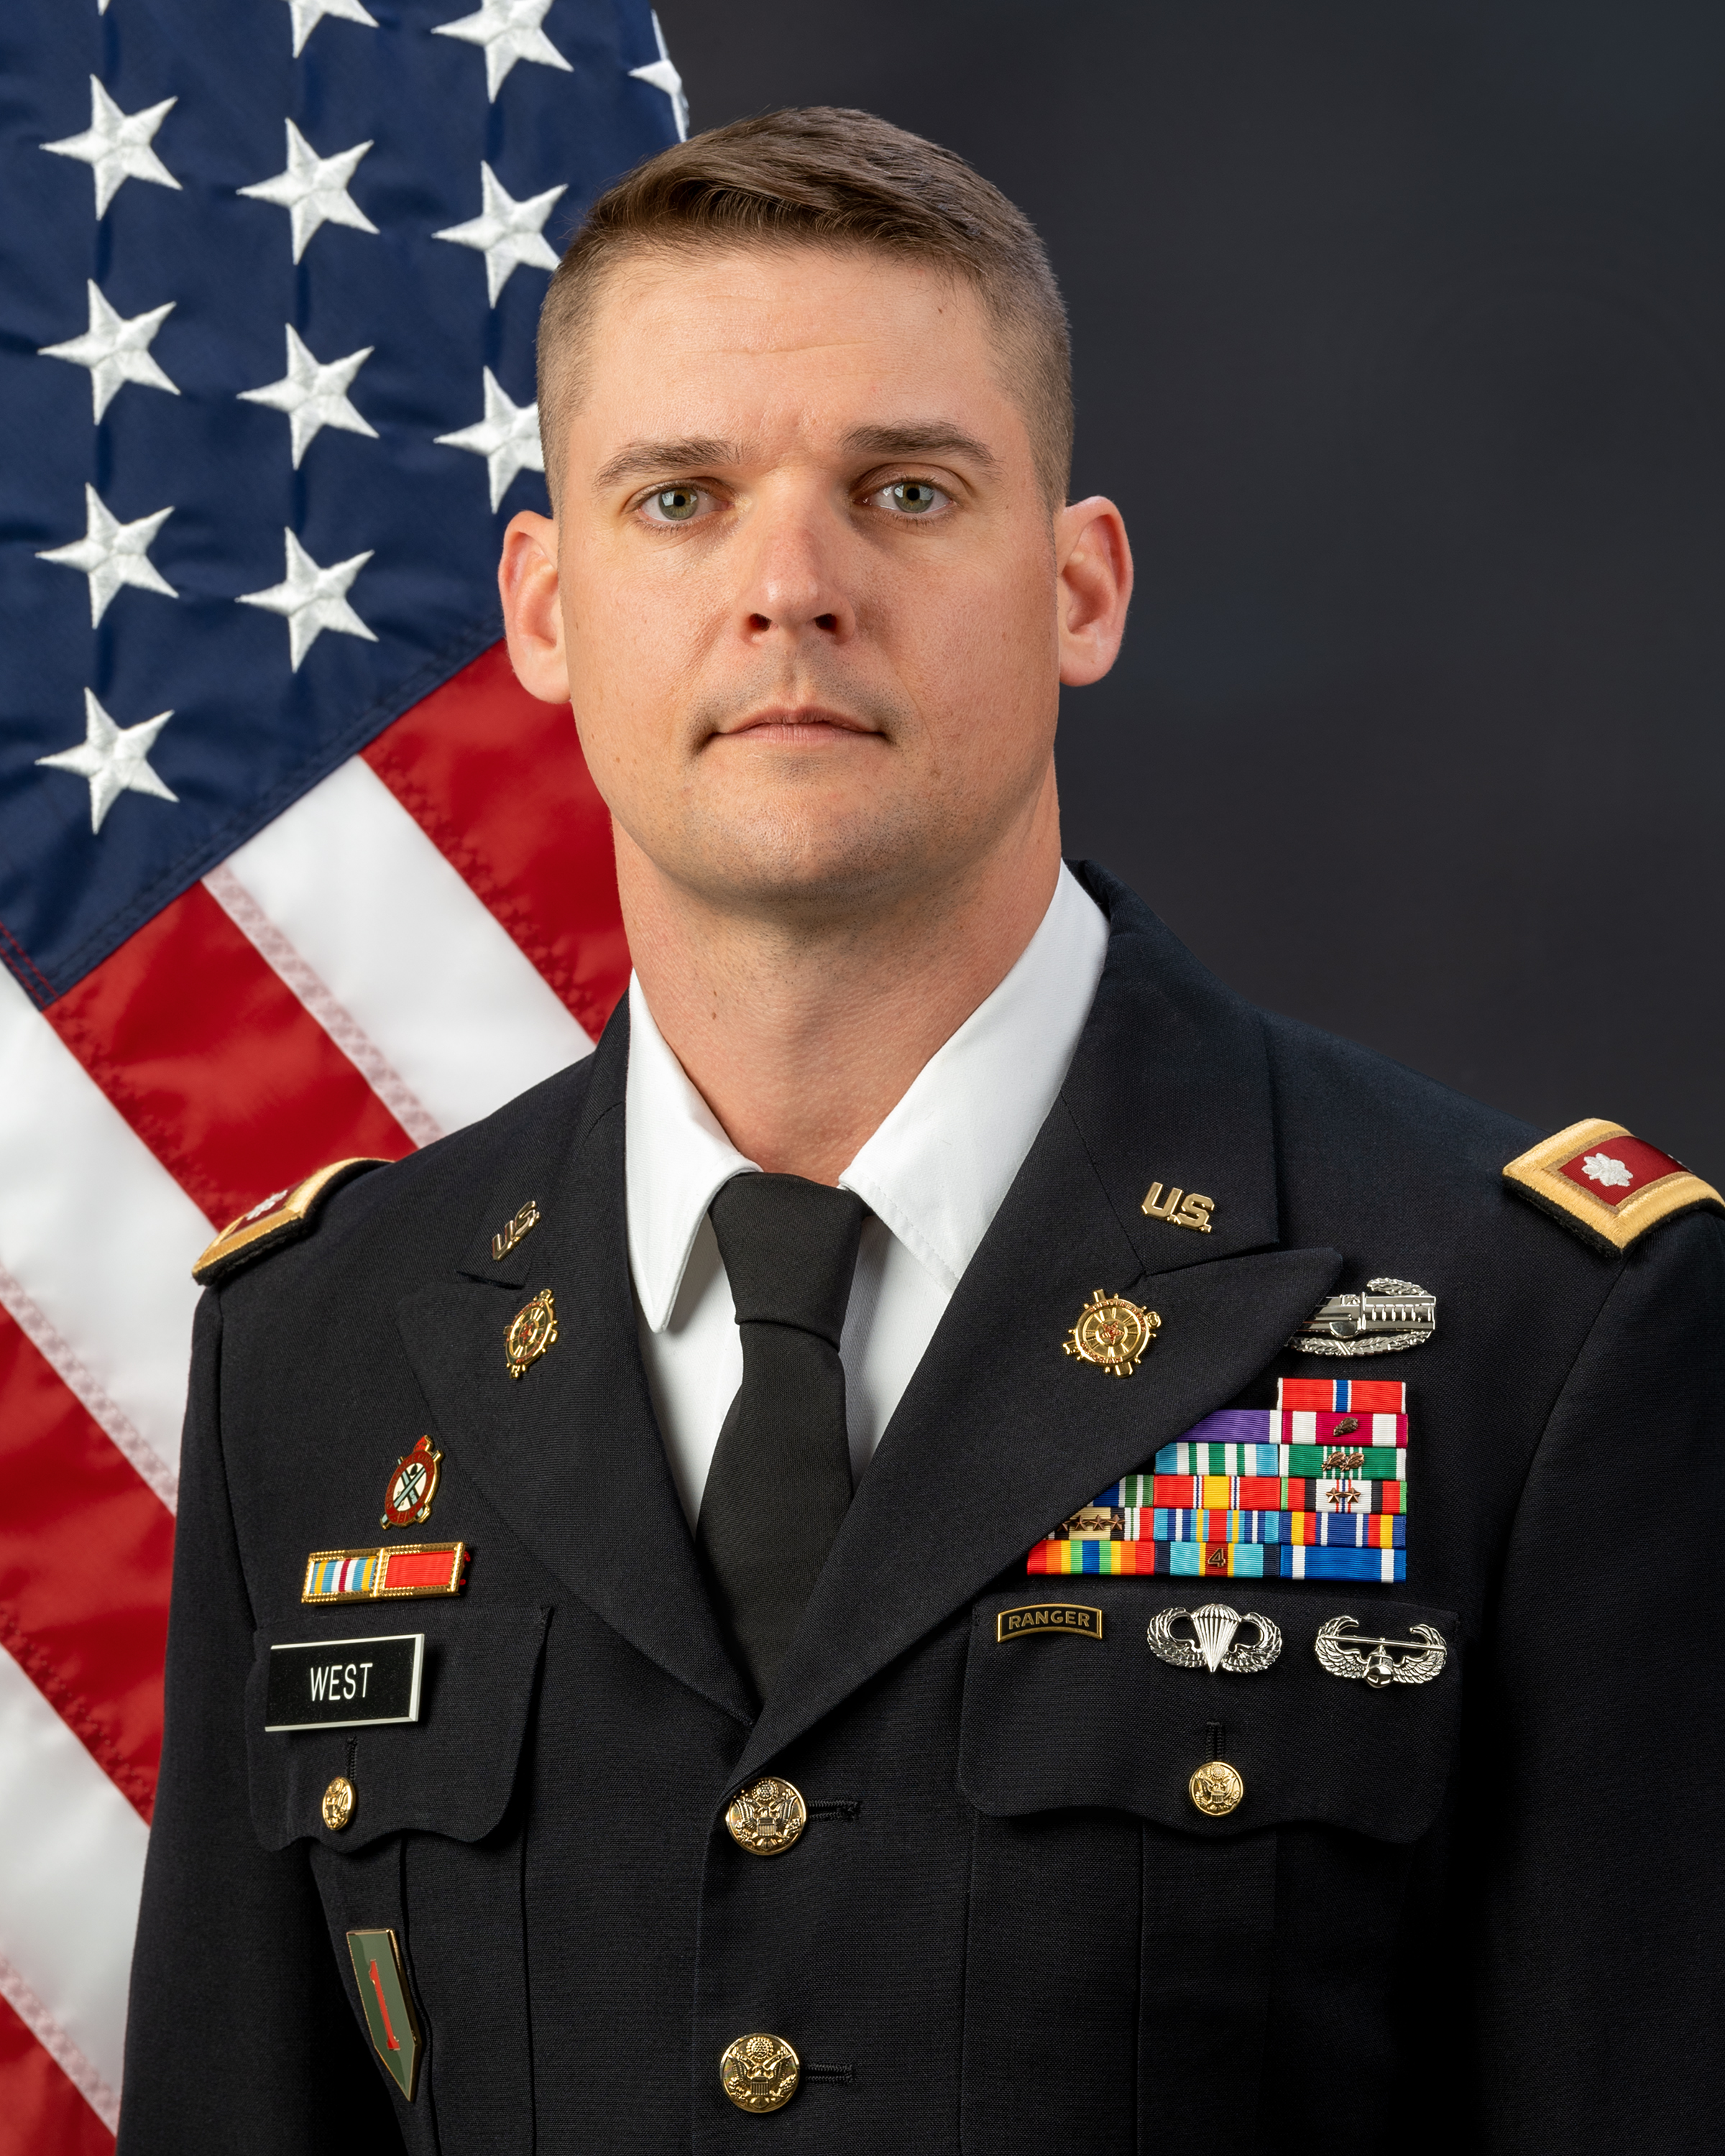 Robert J. West, LTC, USA, Commander